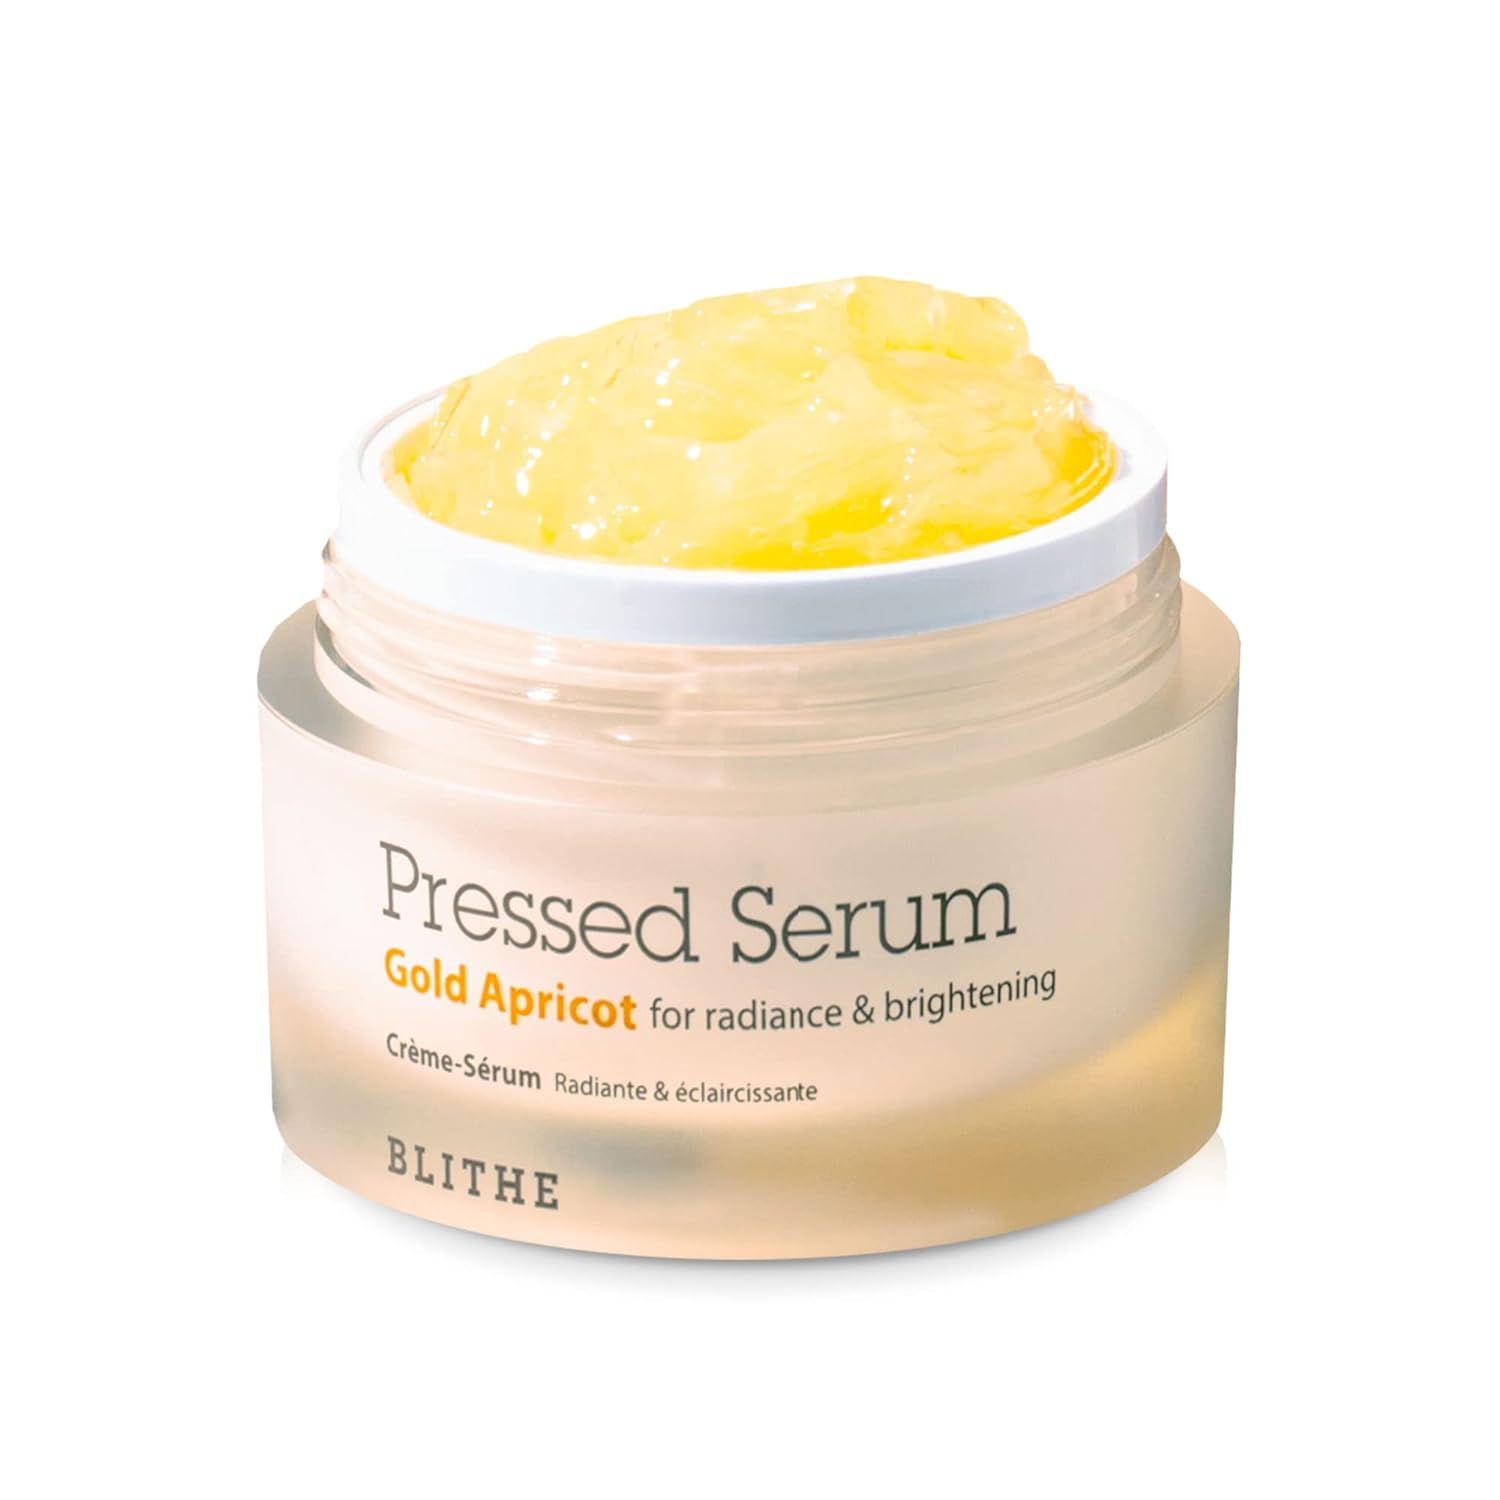 Blithe Pressed Serum Gold Apricot Korean Face Moisturizer - Creamy Niacinamide Serum for Natural ... | Amazon (US)